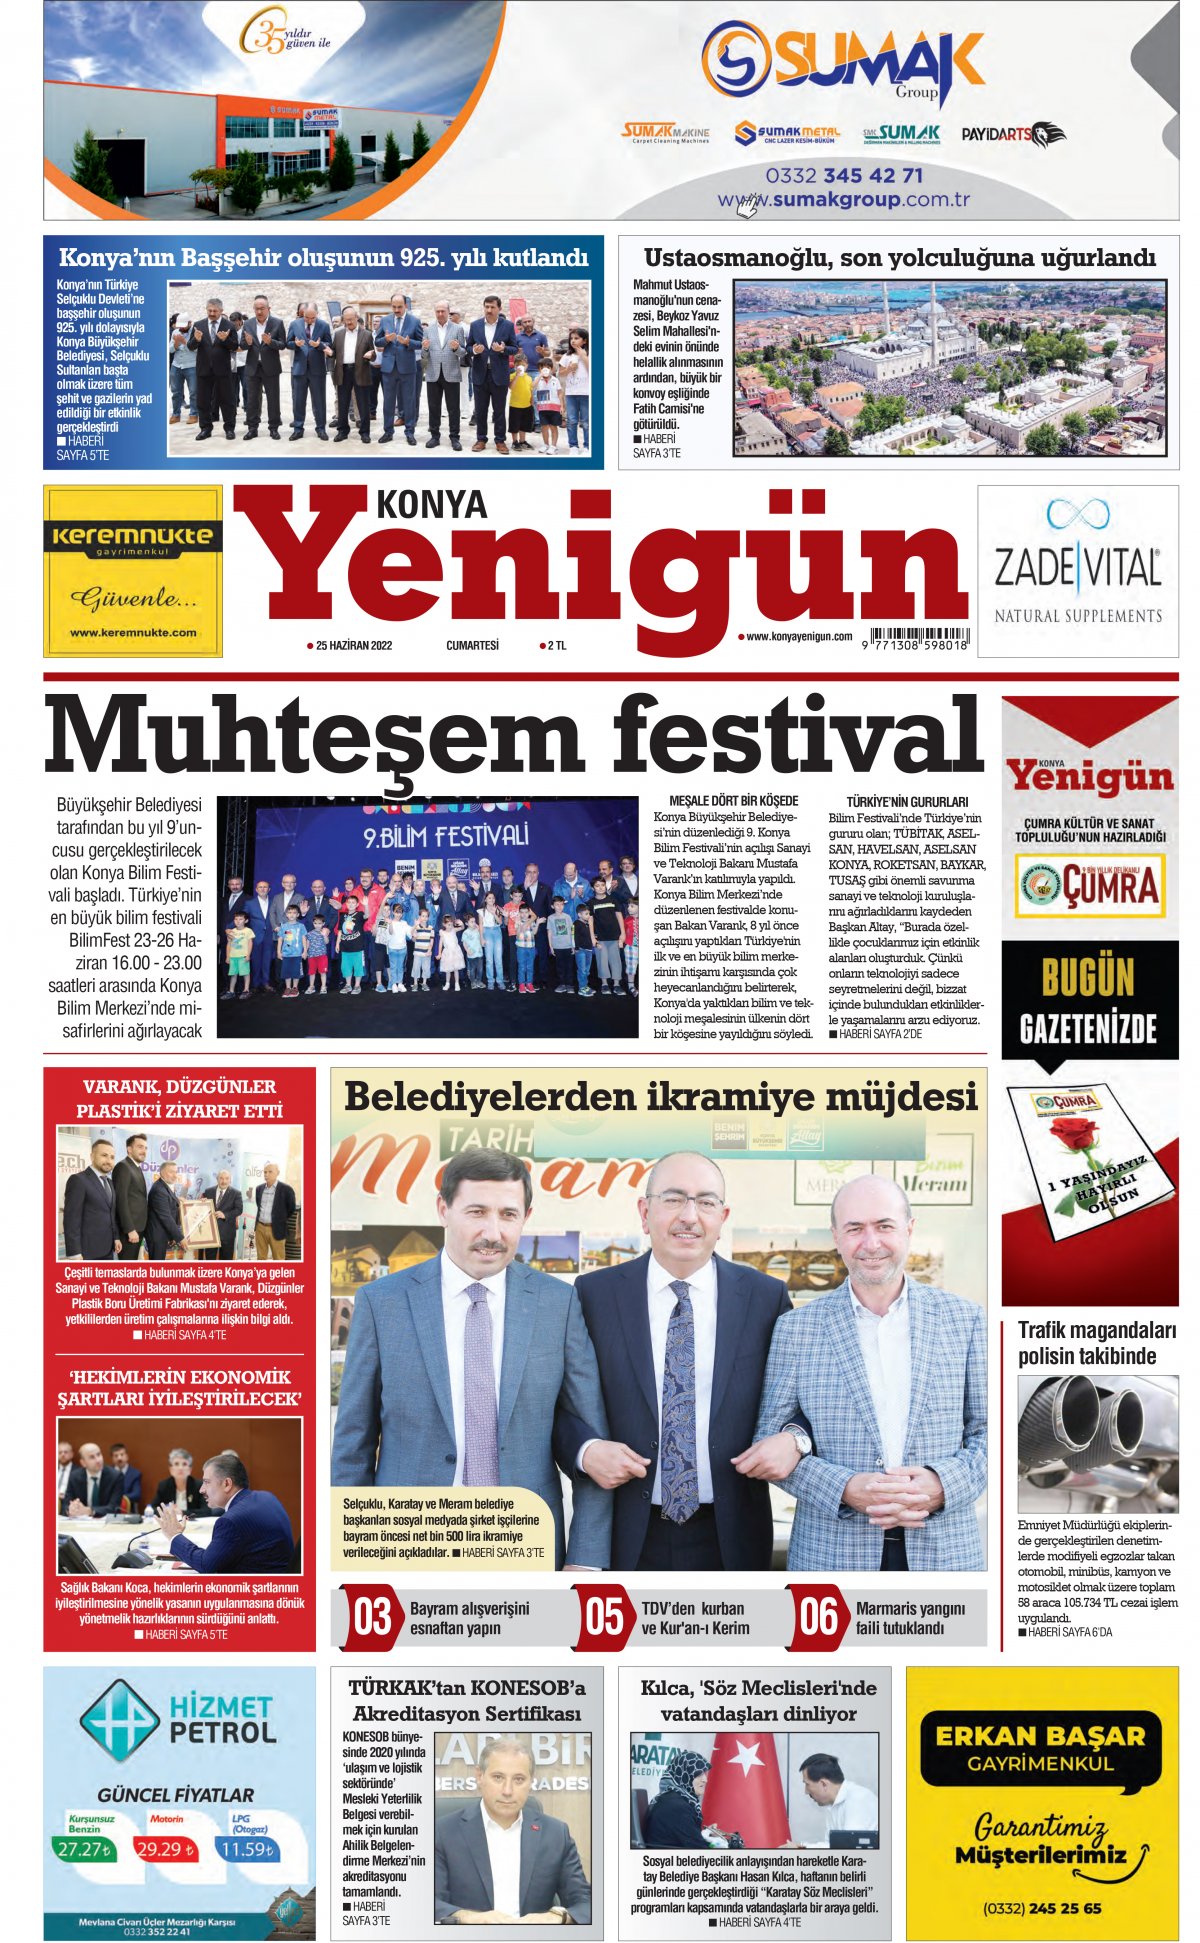 Konya Yenigün Gazetesi - 25.06.2022 Manşeti